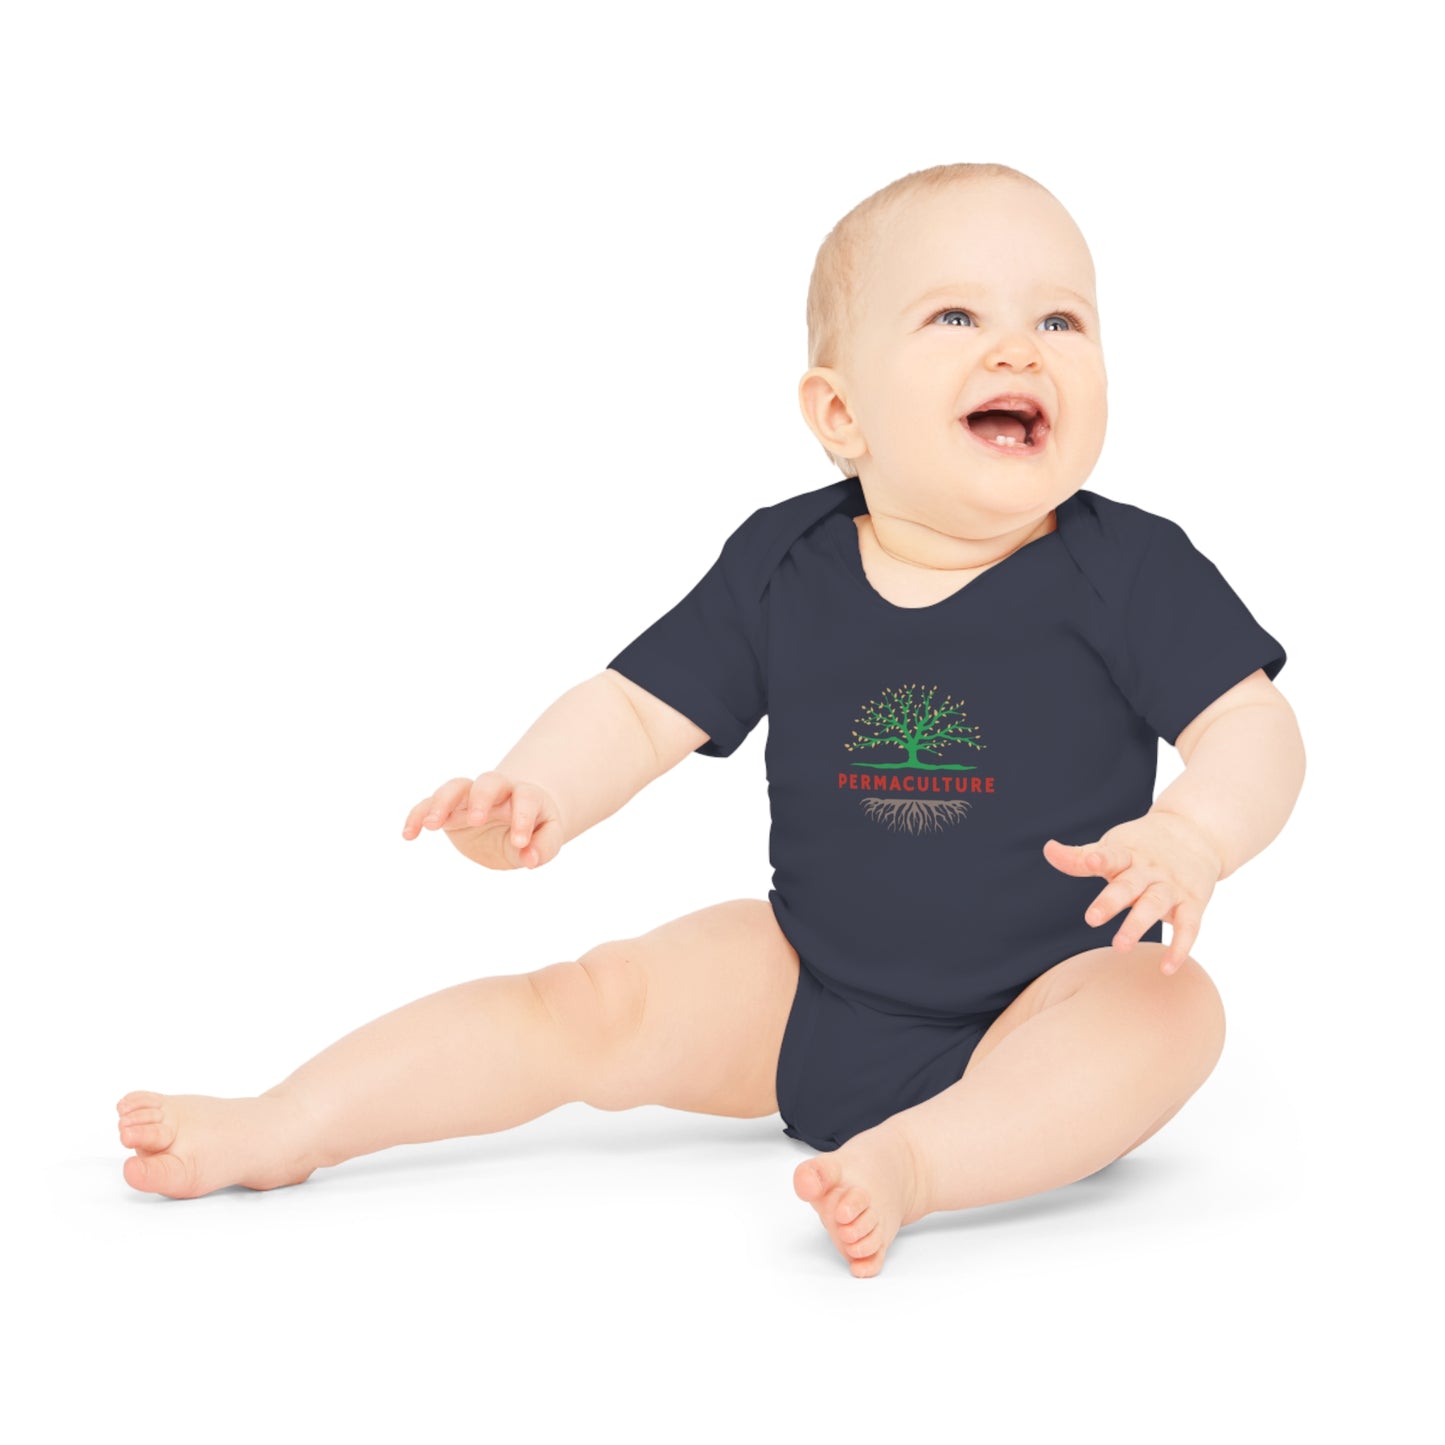 Permaculture, Baby Organic Short Sleeve Bodysuit